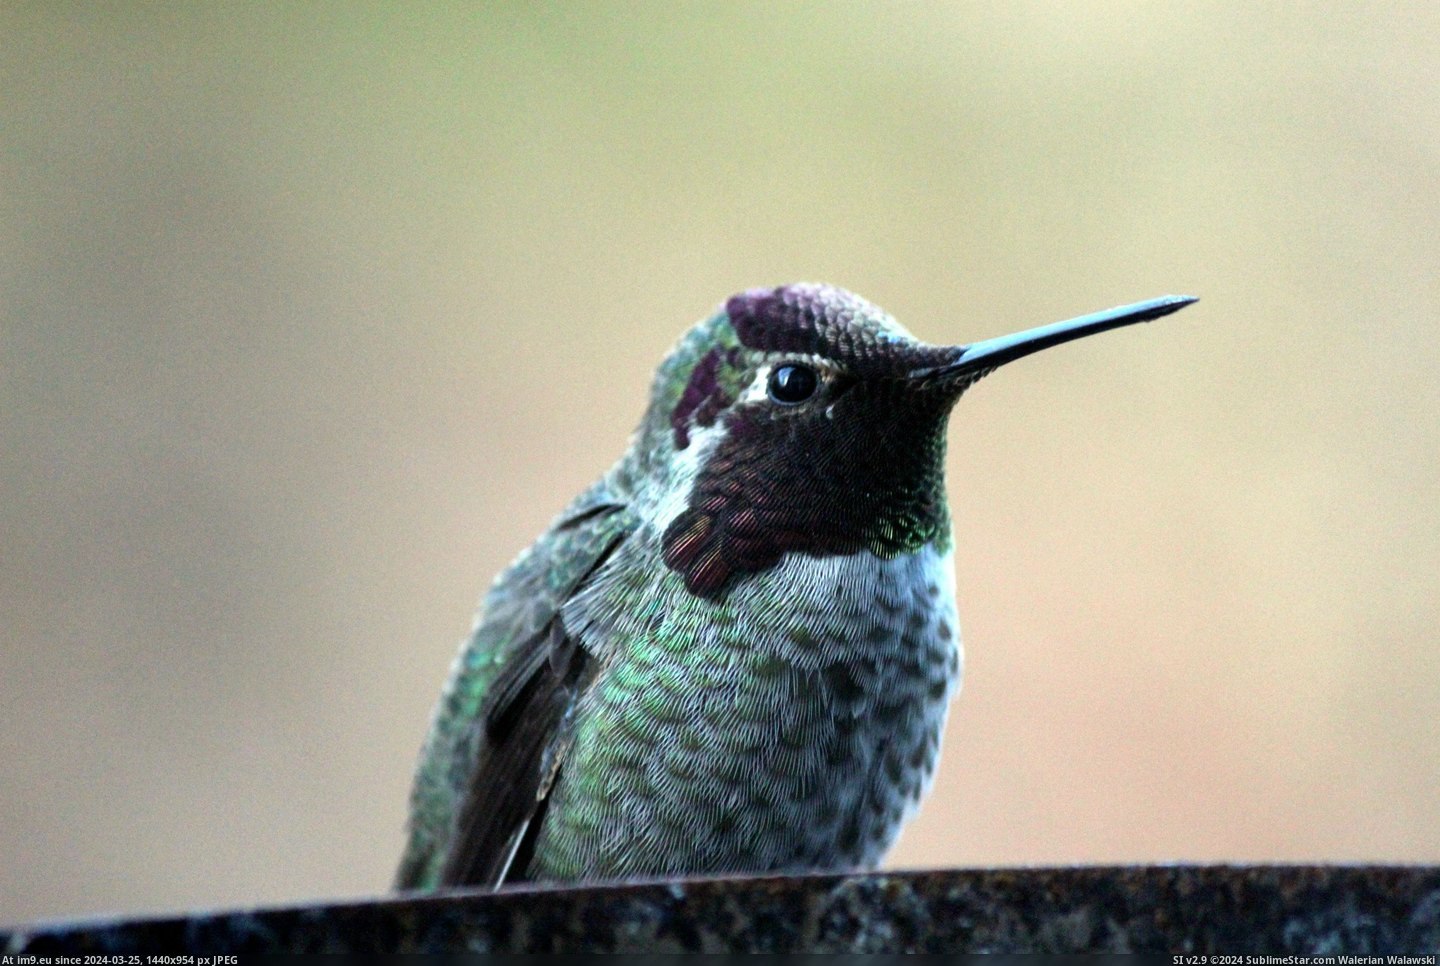 #Was #Morning #Showing #Changed #Angle #Hummingbird #Iridescent #Off #Head #Hood [Pics] A hummingbird showing off his iridescent hood this morning. The only thing that changed was the angle of his head. 2 Pic. (Image of album My r/PICS favs))